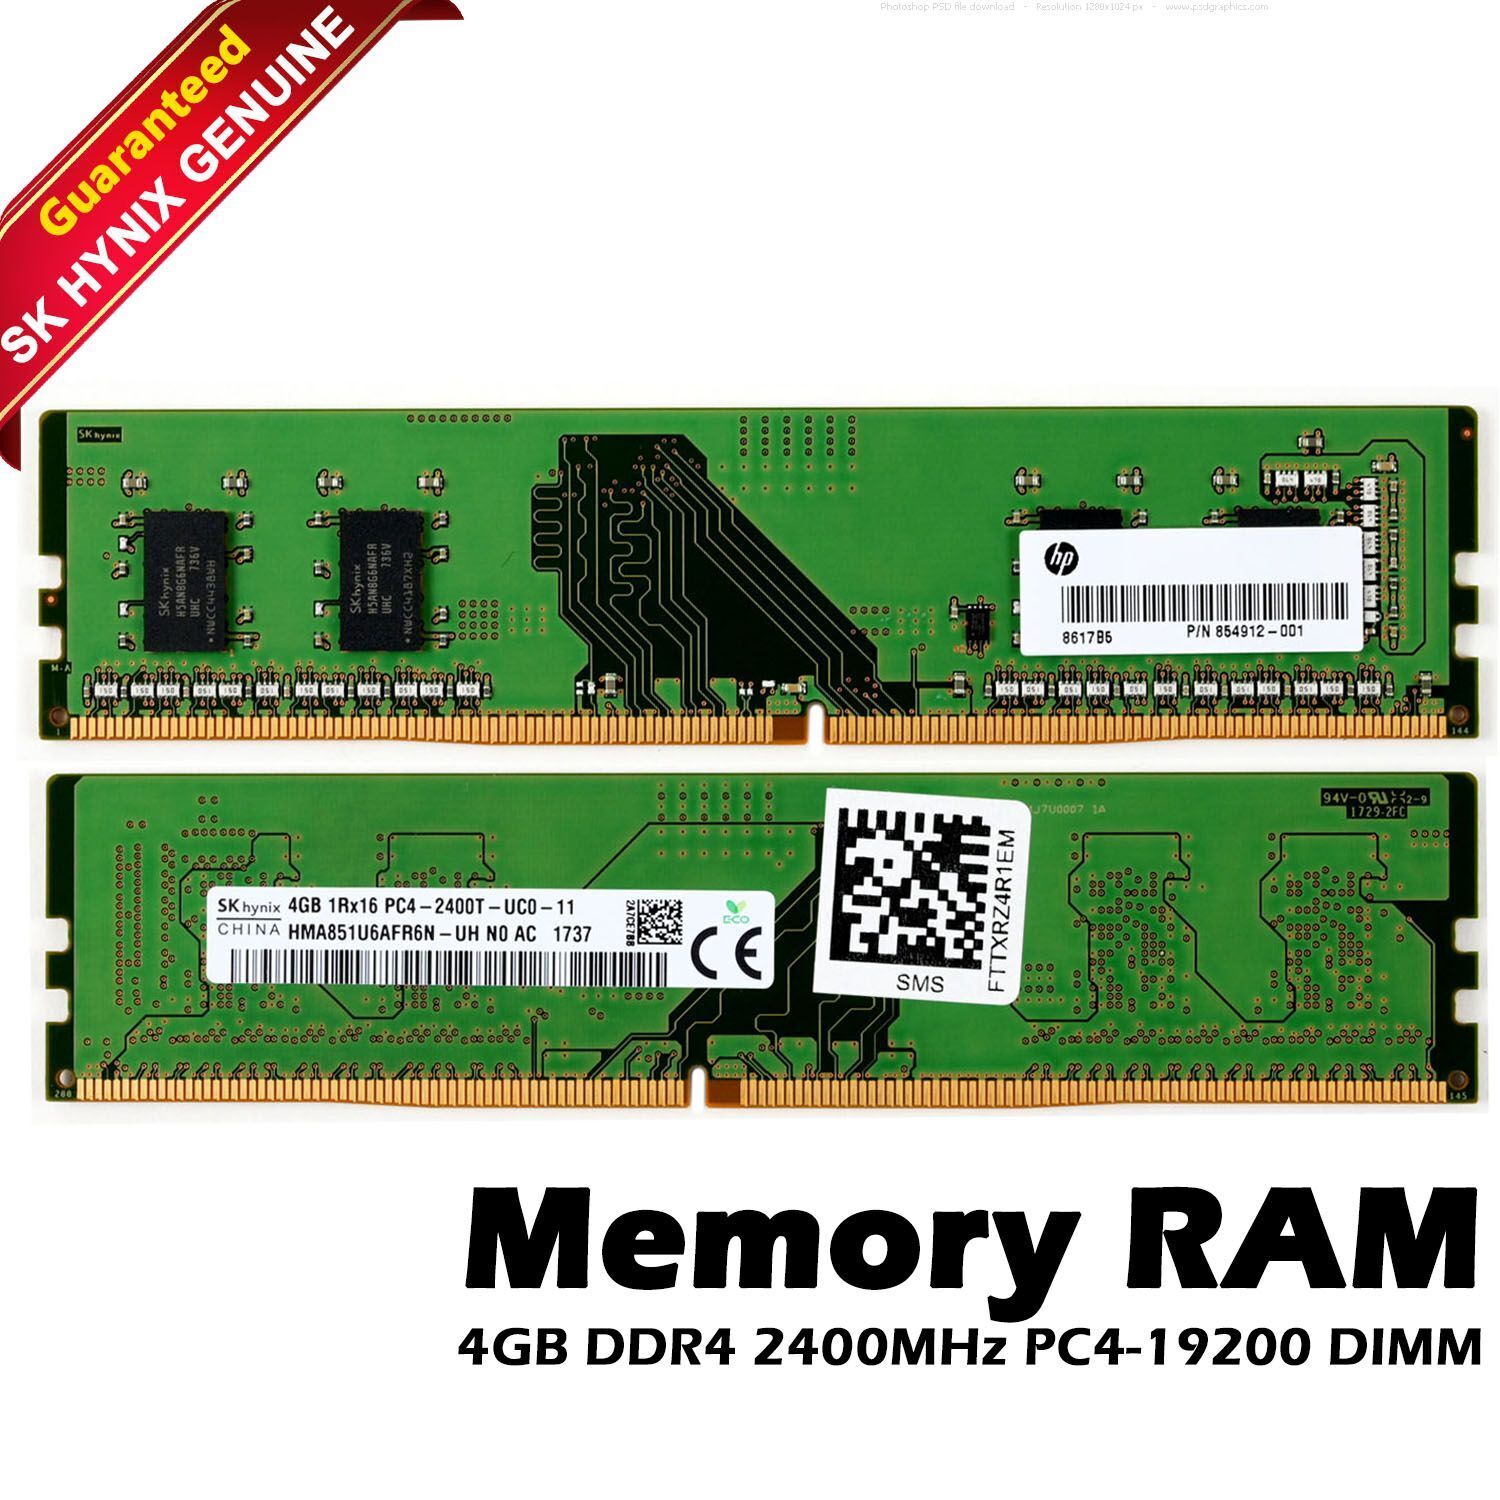 HP 854912-001 SKHYNIX 4GB RAM 1RX16 DDR4 PC4-2400T-UC0-11 DESKTOP MEMORY RAM